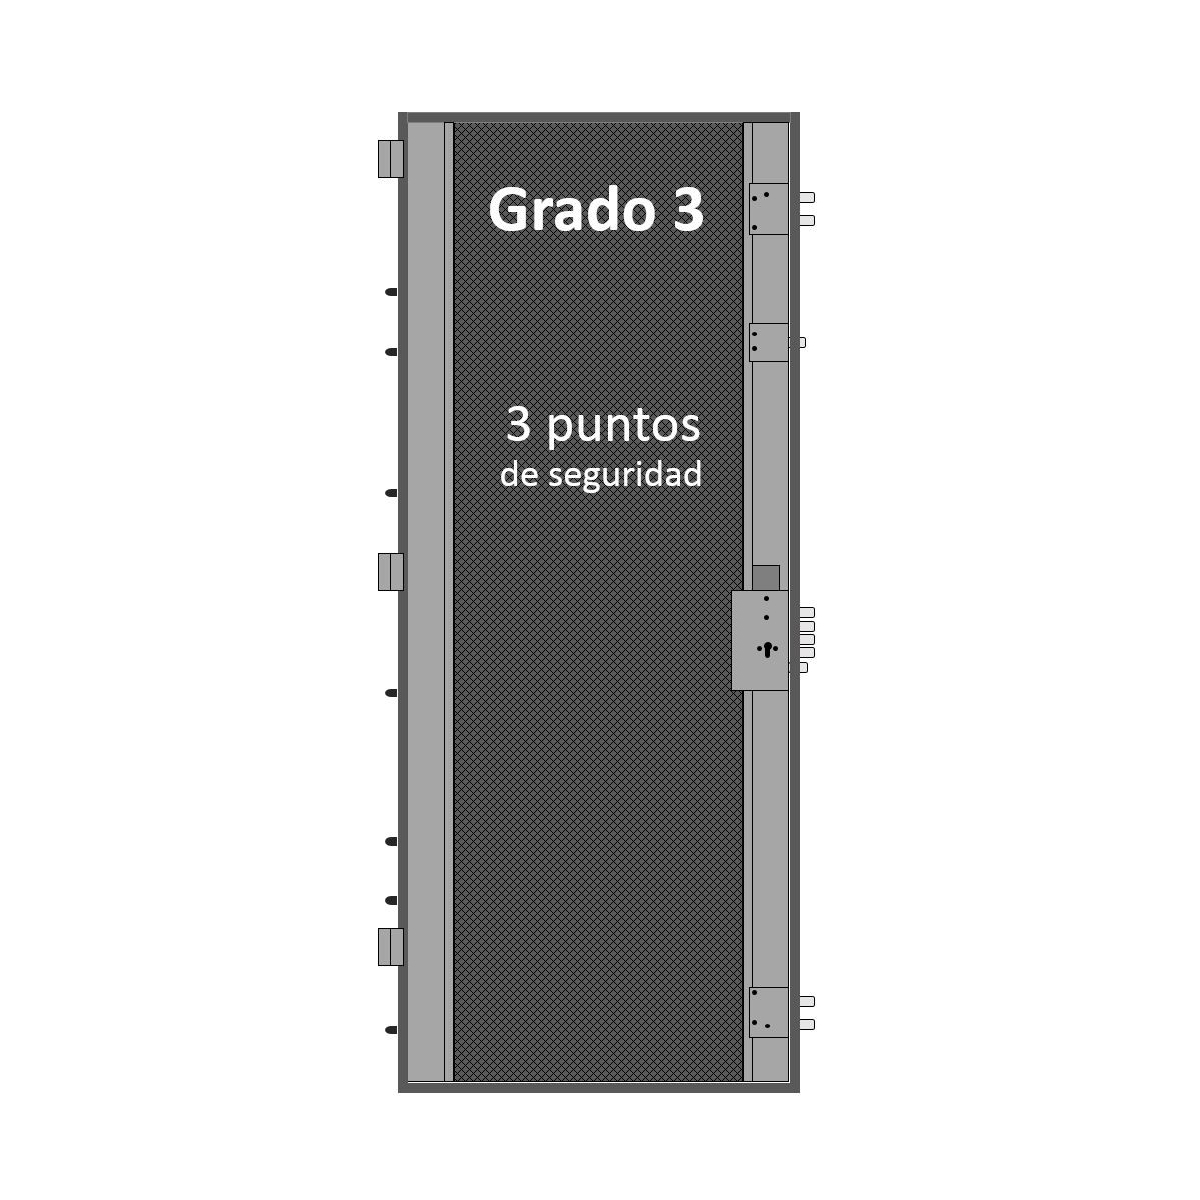 Puertas acorazadas Serie Omega Cearco - Puerta Acorazada 90cm grado 3 Arauco Omega